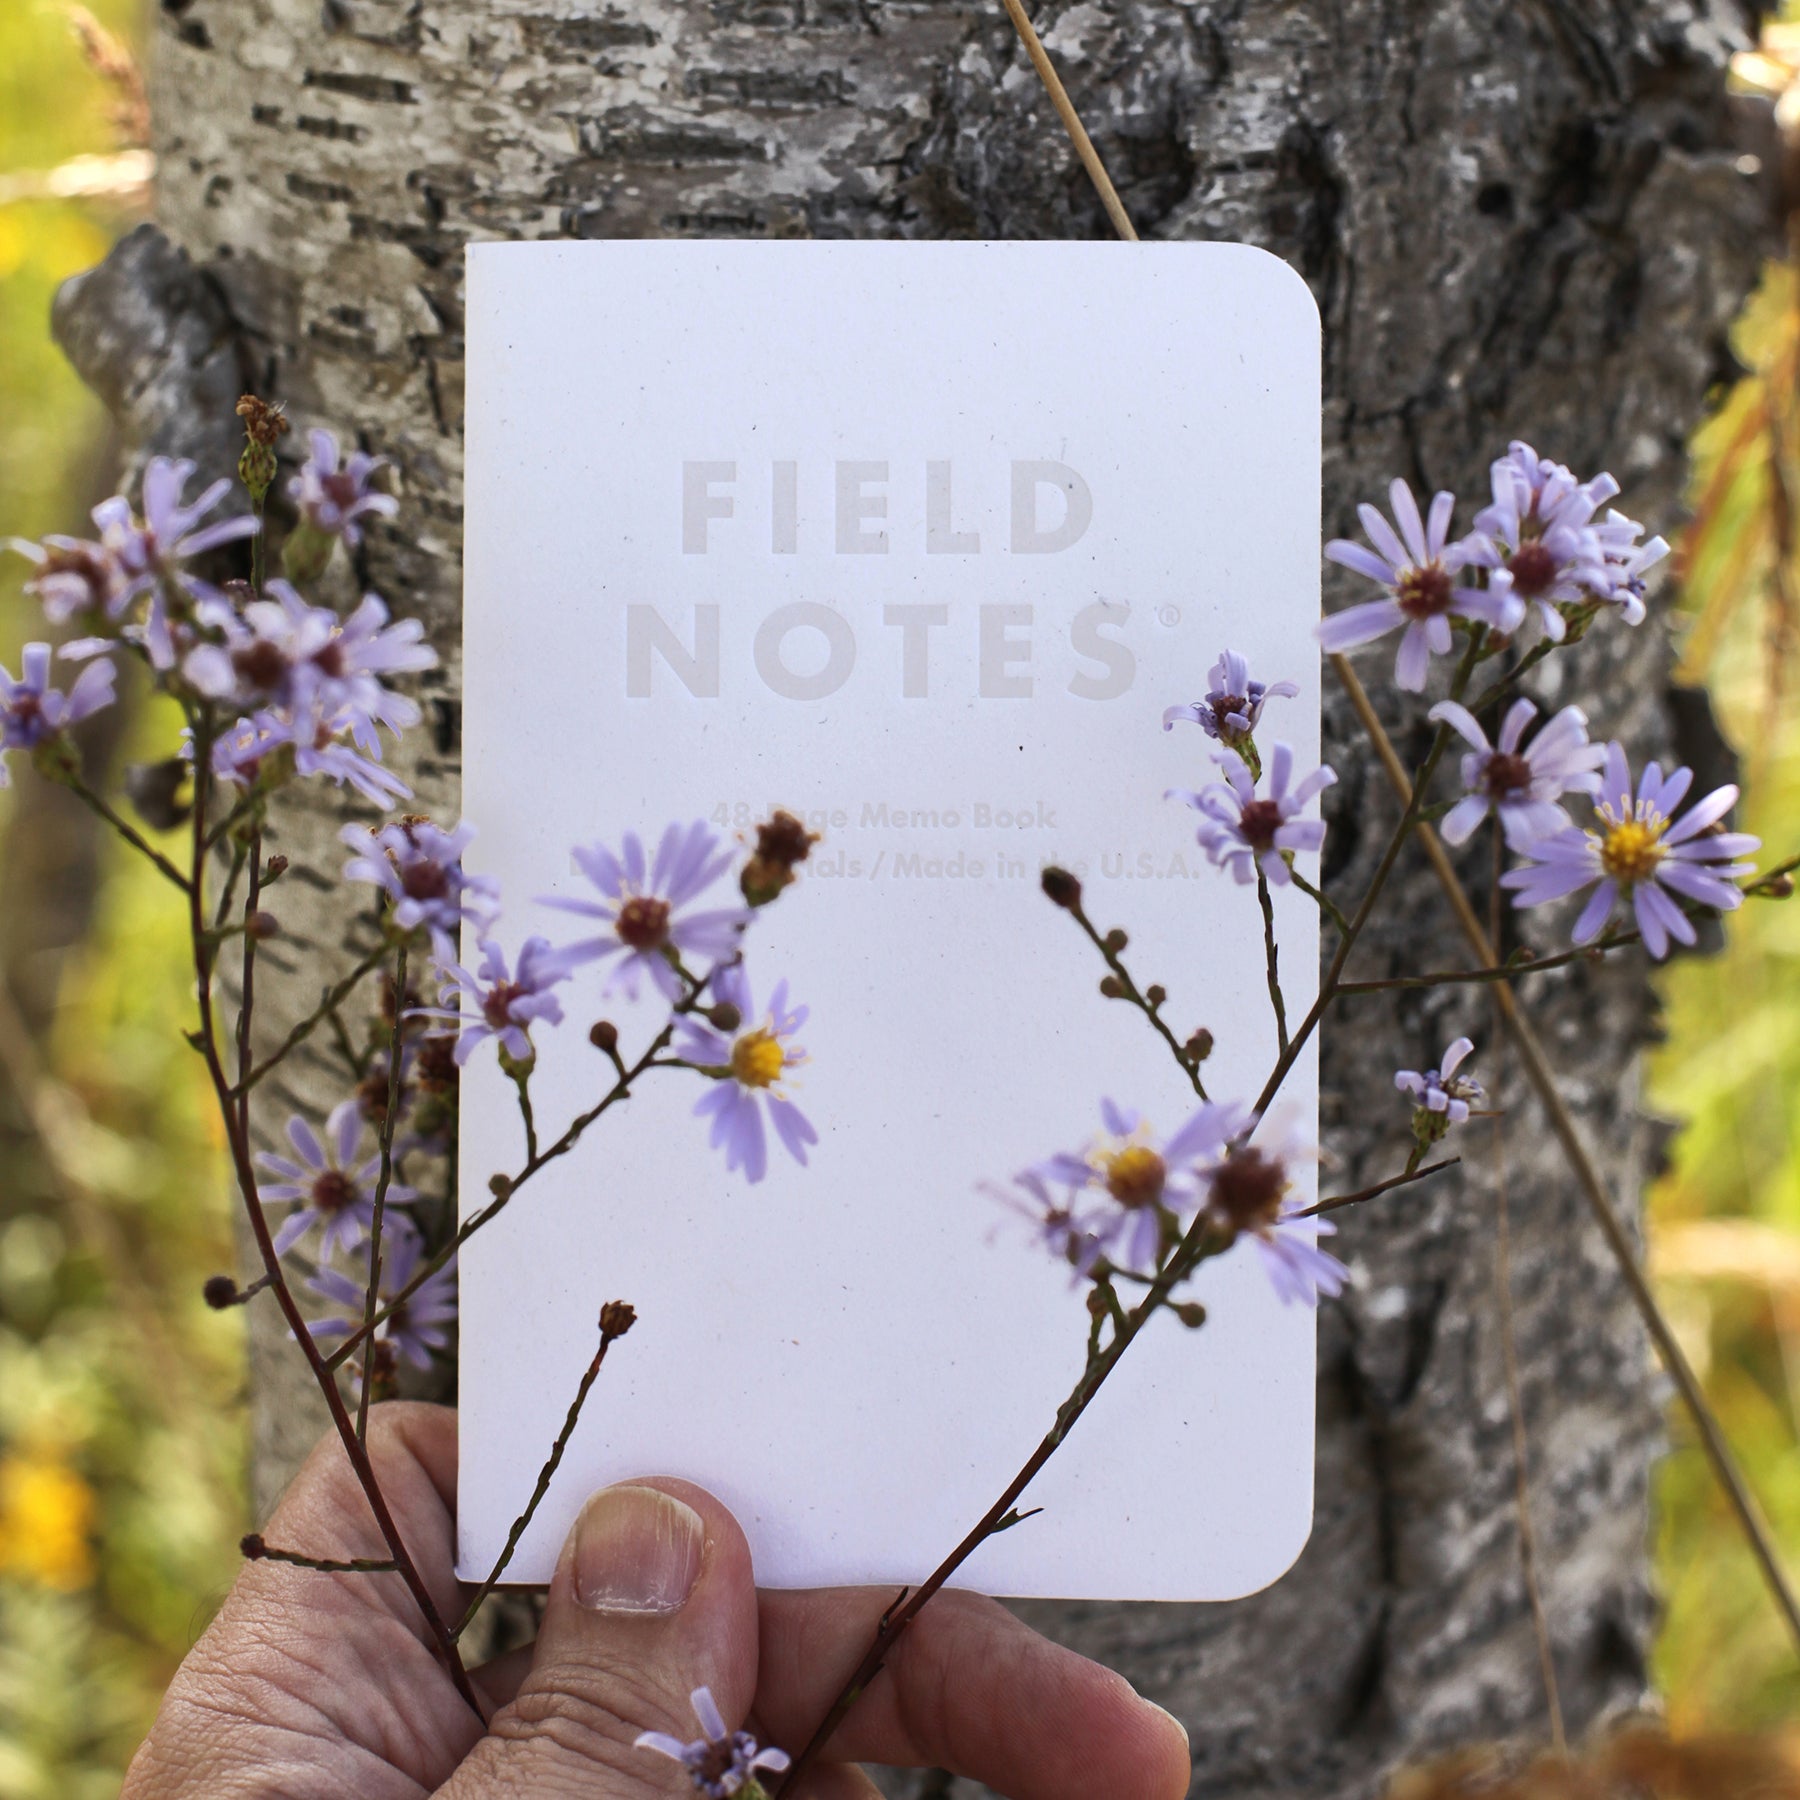 Field Notes Birch Bark Notebooks (3-Pack)